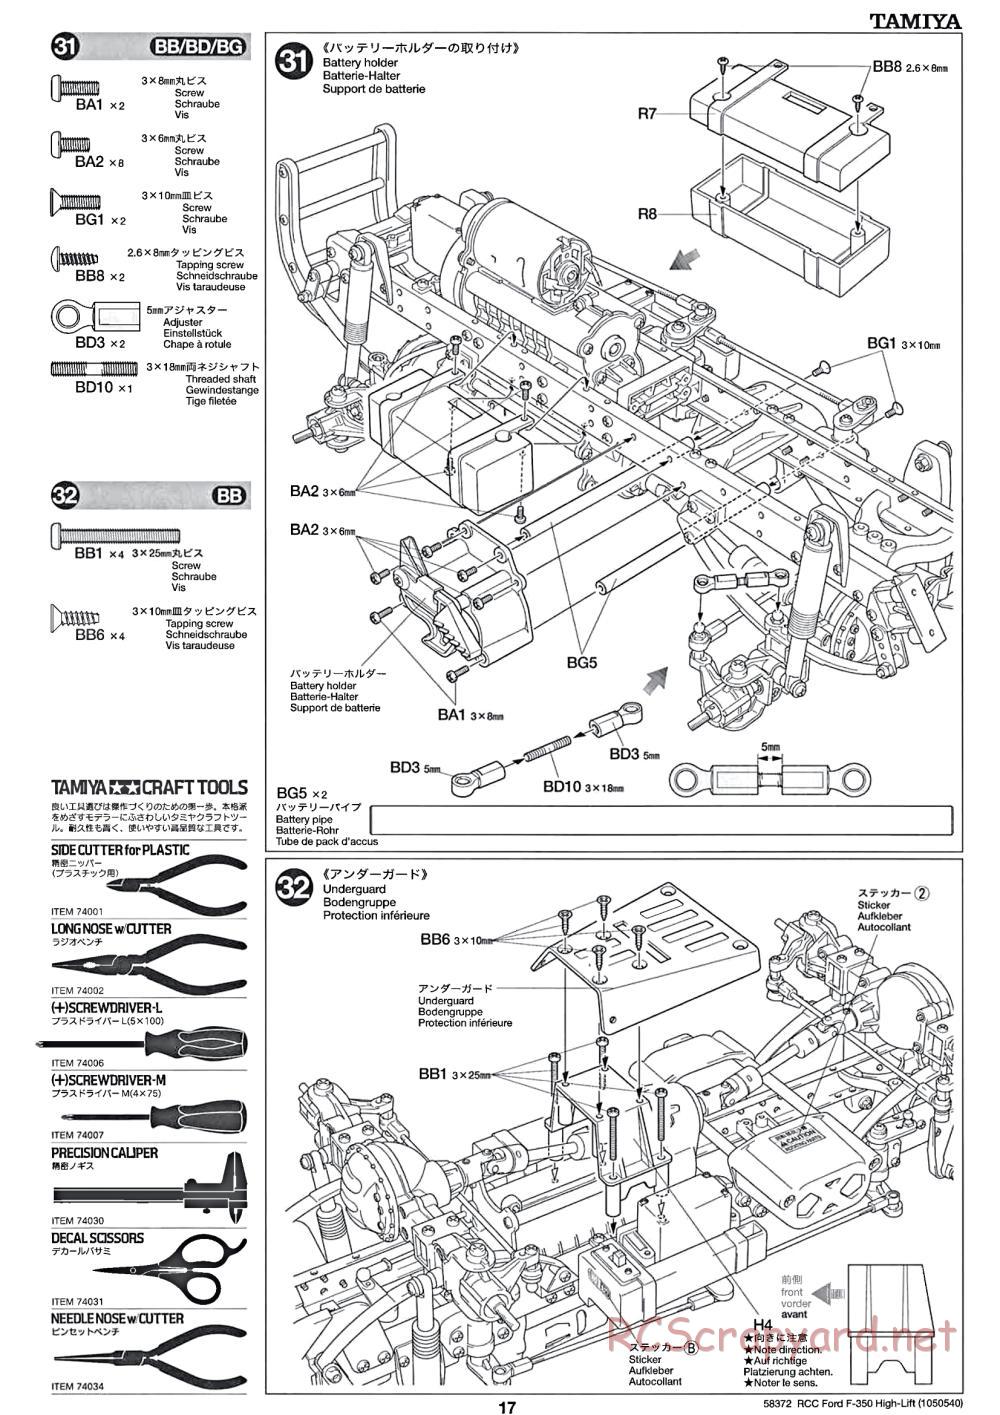 Tamiya - Ford F350 High-Lift Chassis - Manual - Page 17